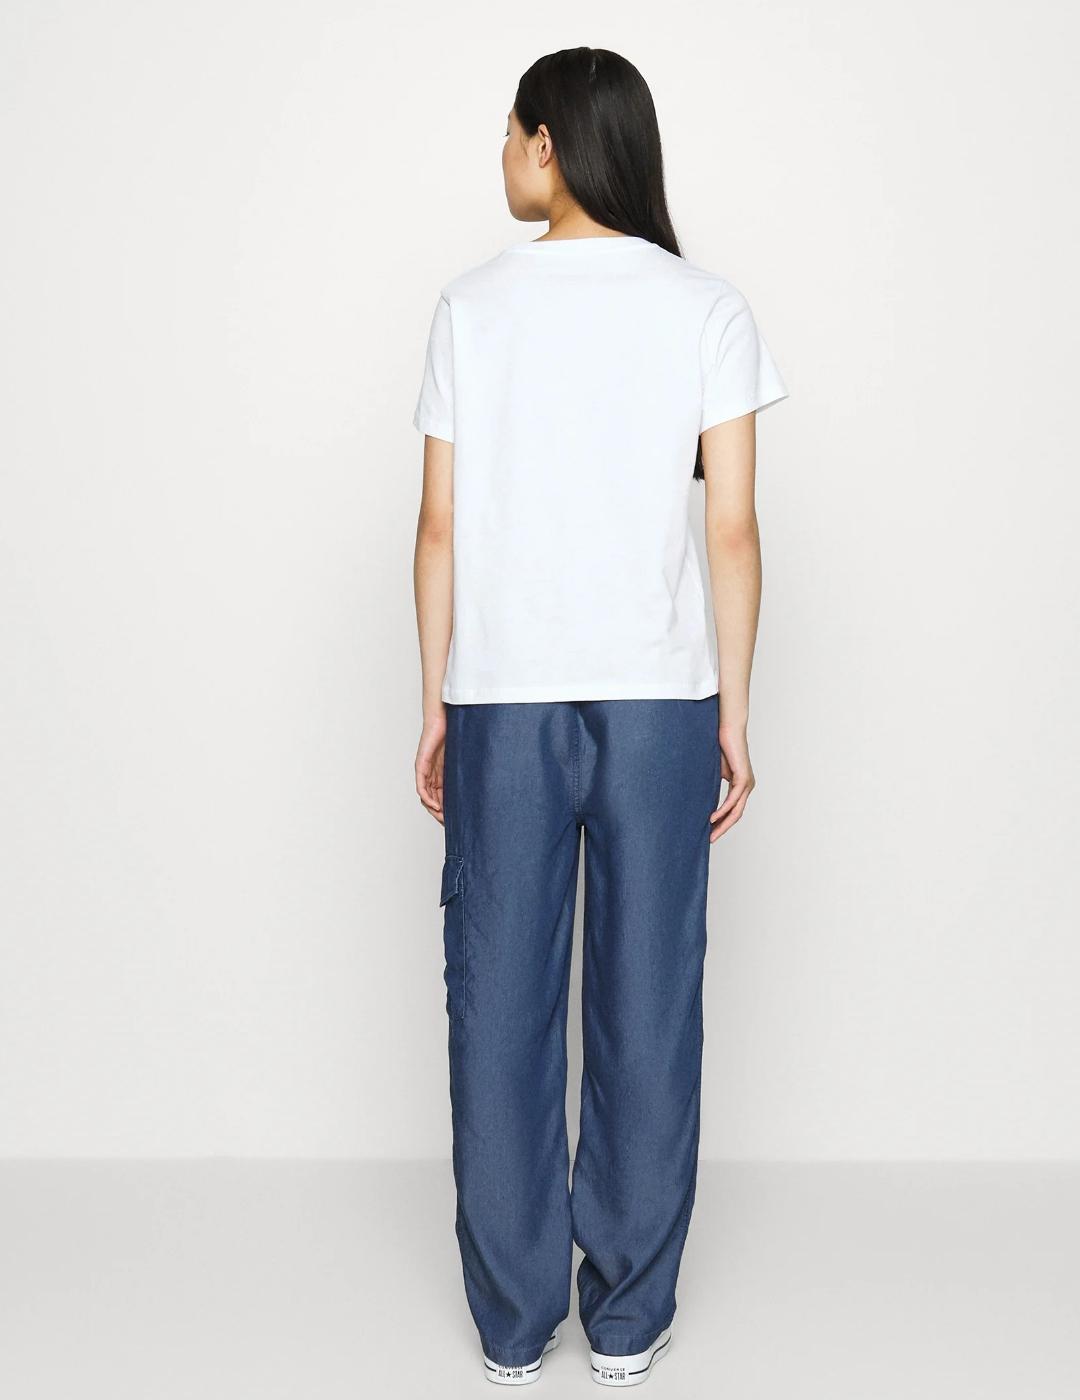 Camiseta blanca logo floral alice mujer pepe jeans